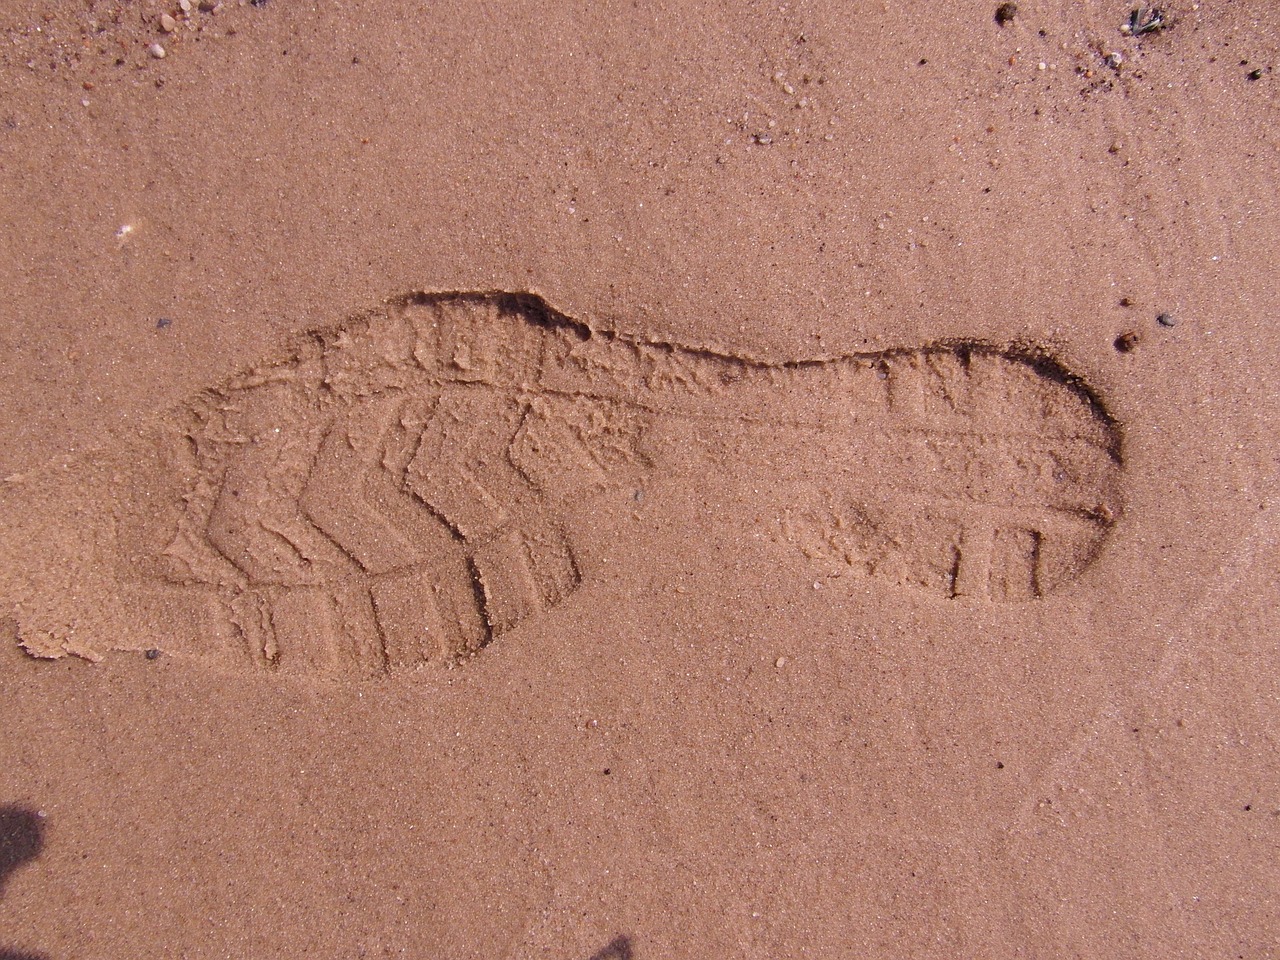 footprint schusohle trace free photo